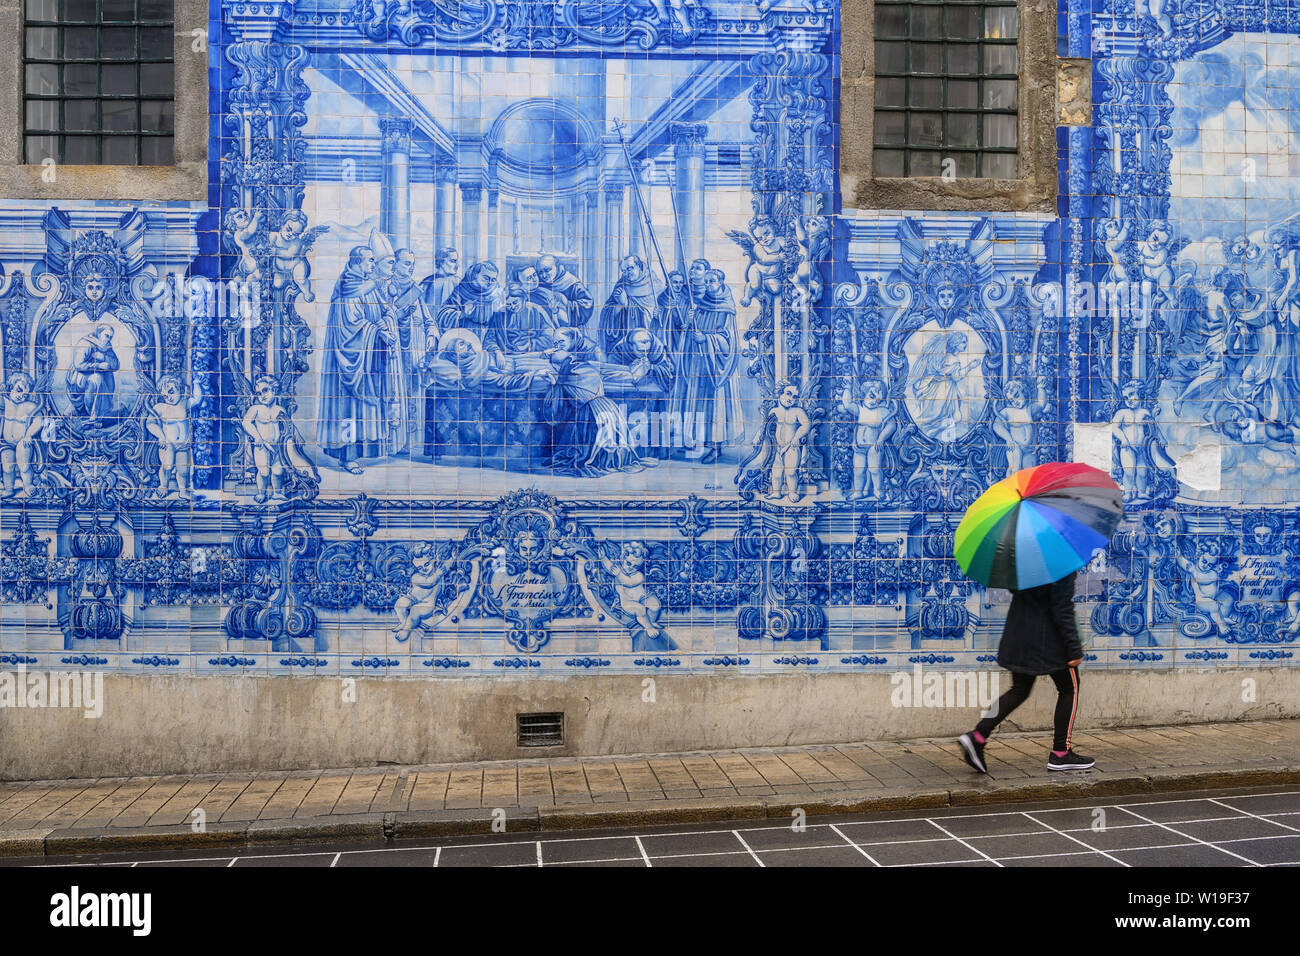 PORTO, PORTUGAL - Abril 8, 2019: Porto Portugal Arte Mural en la Capilla de las almas Foto de stock